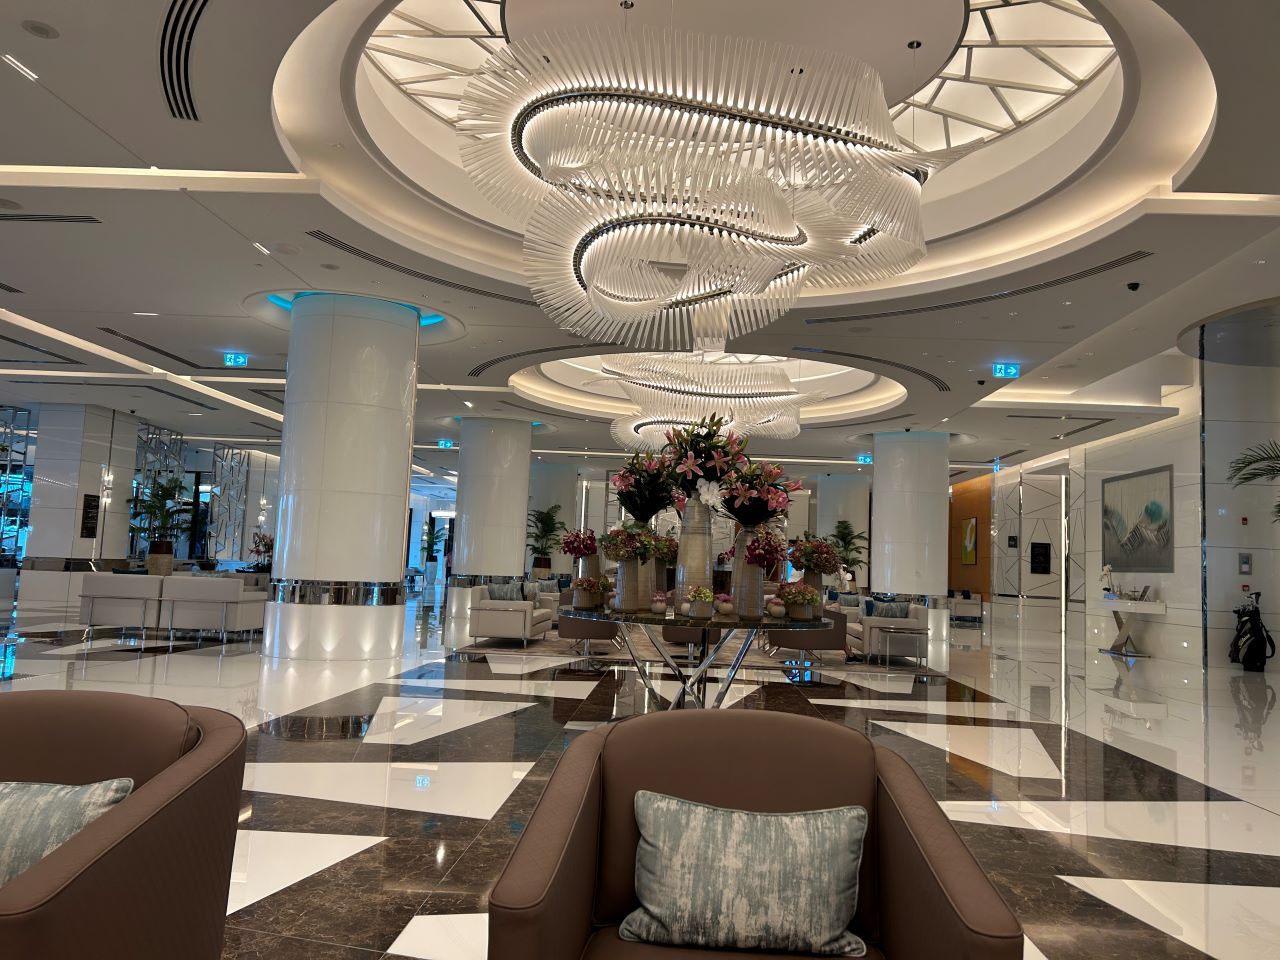 Inside the Hilton Palm Dubai